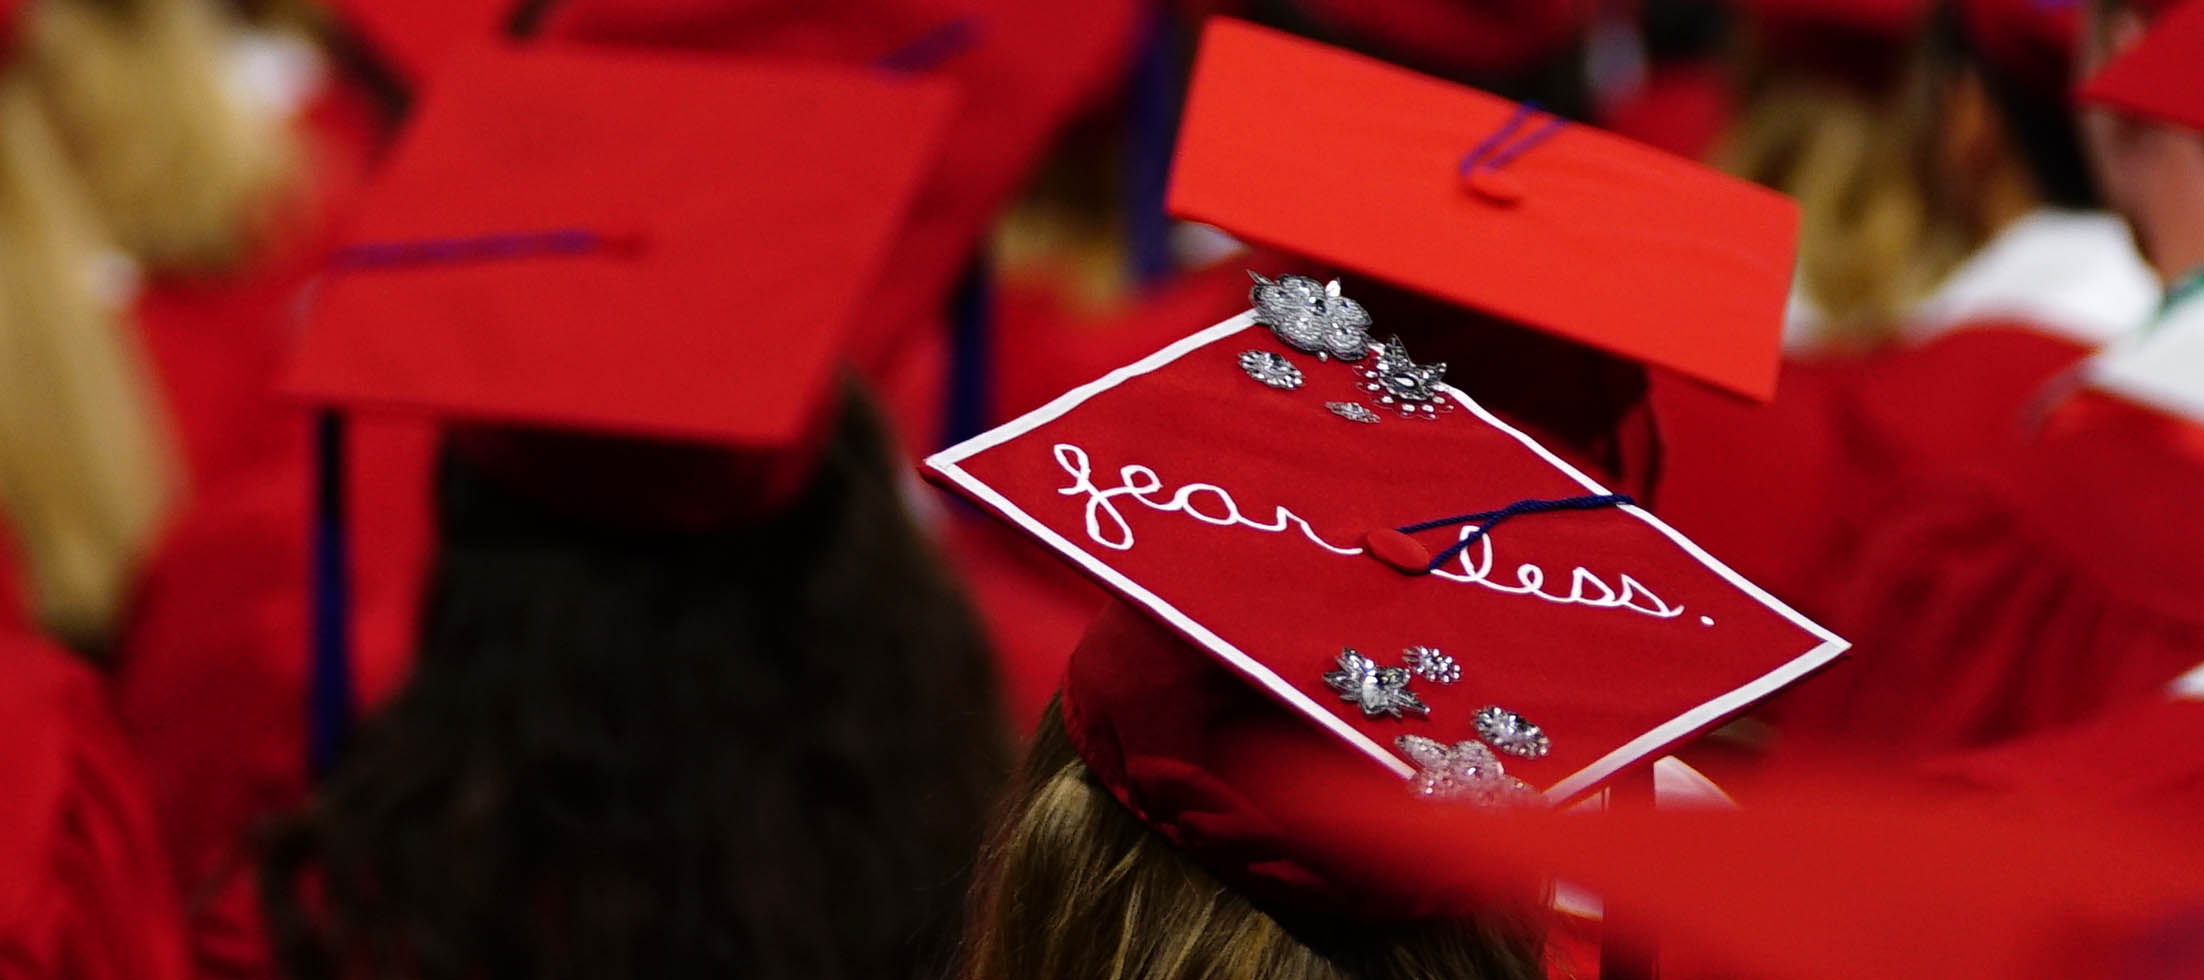  Graduation cap that reads "Fearless"